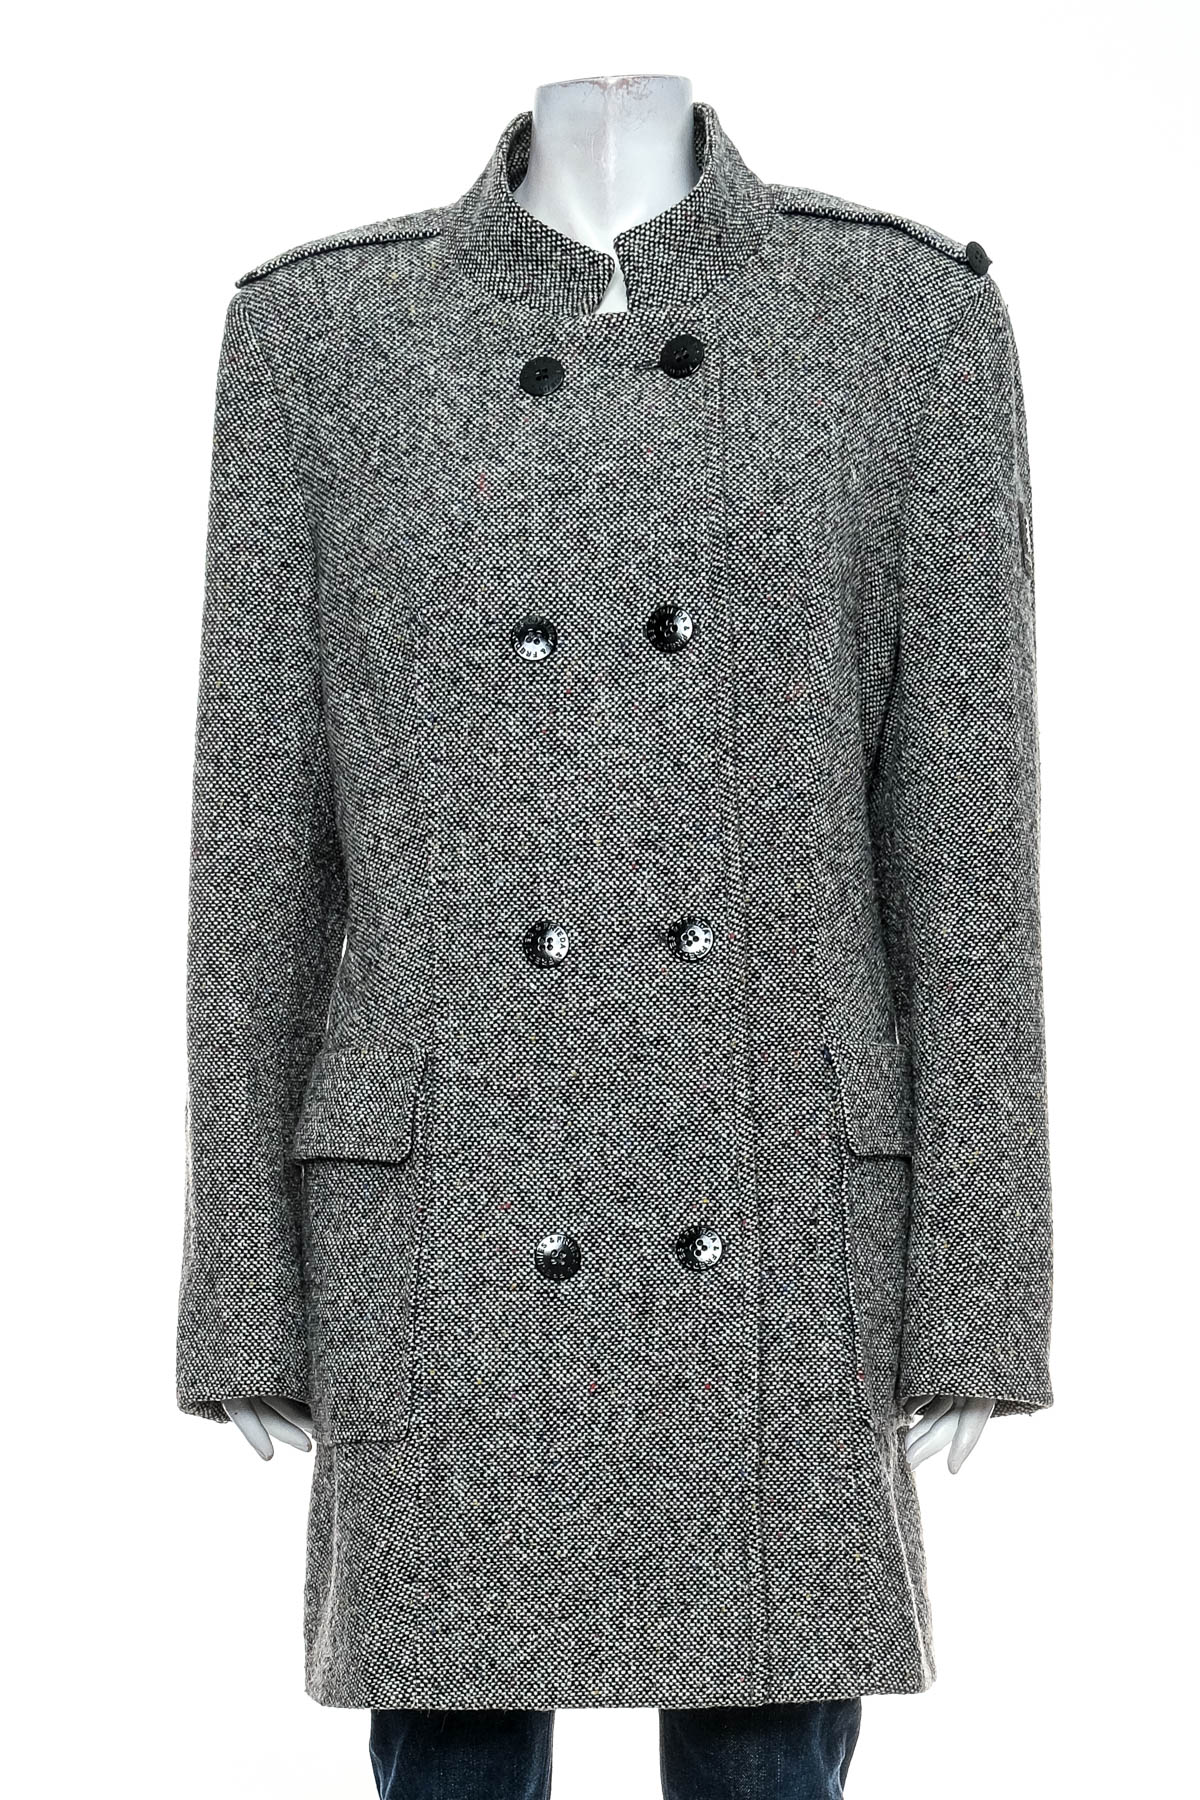 Women's coat - Frieda & Freddies - 0